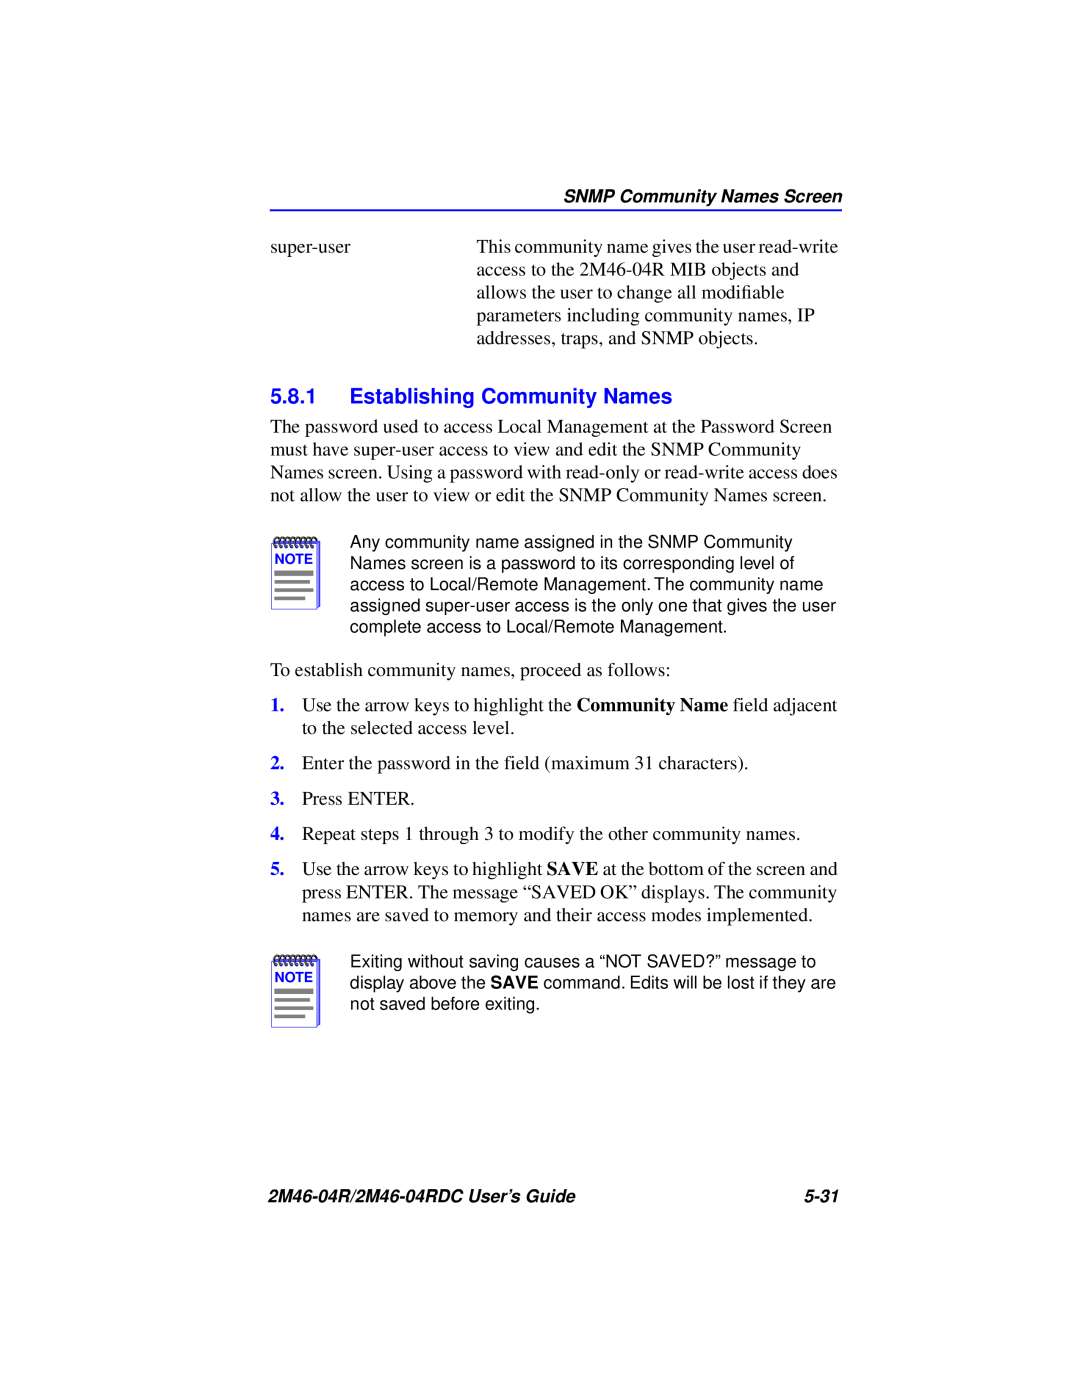 Cabletron Systems pmn manual Establishing Community Names 